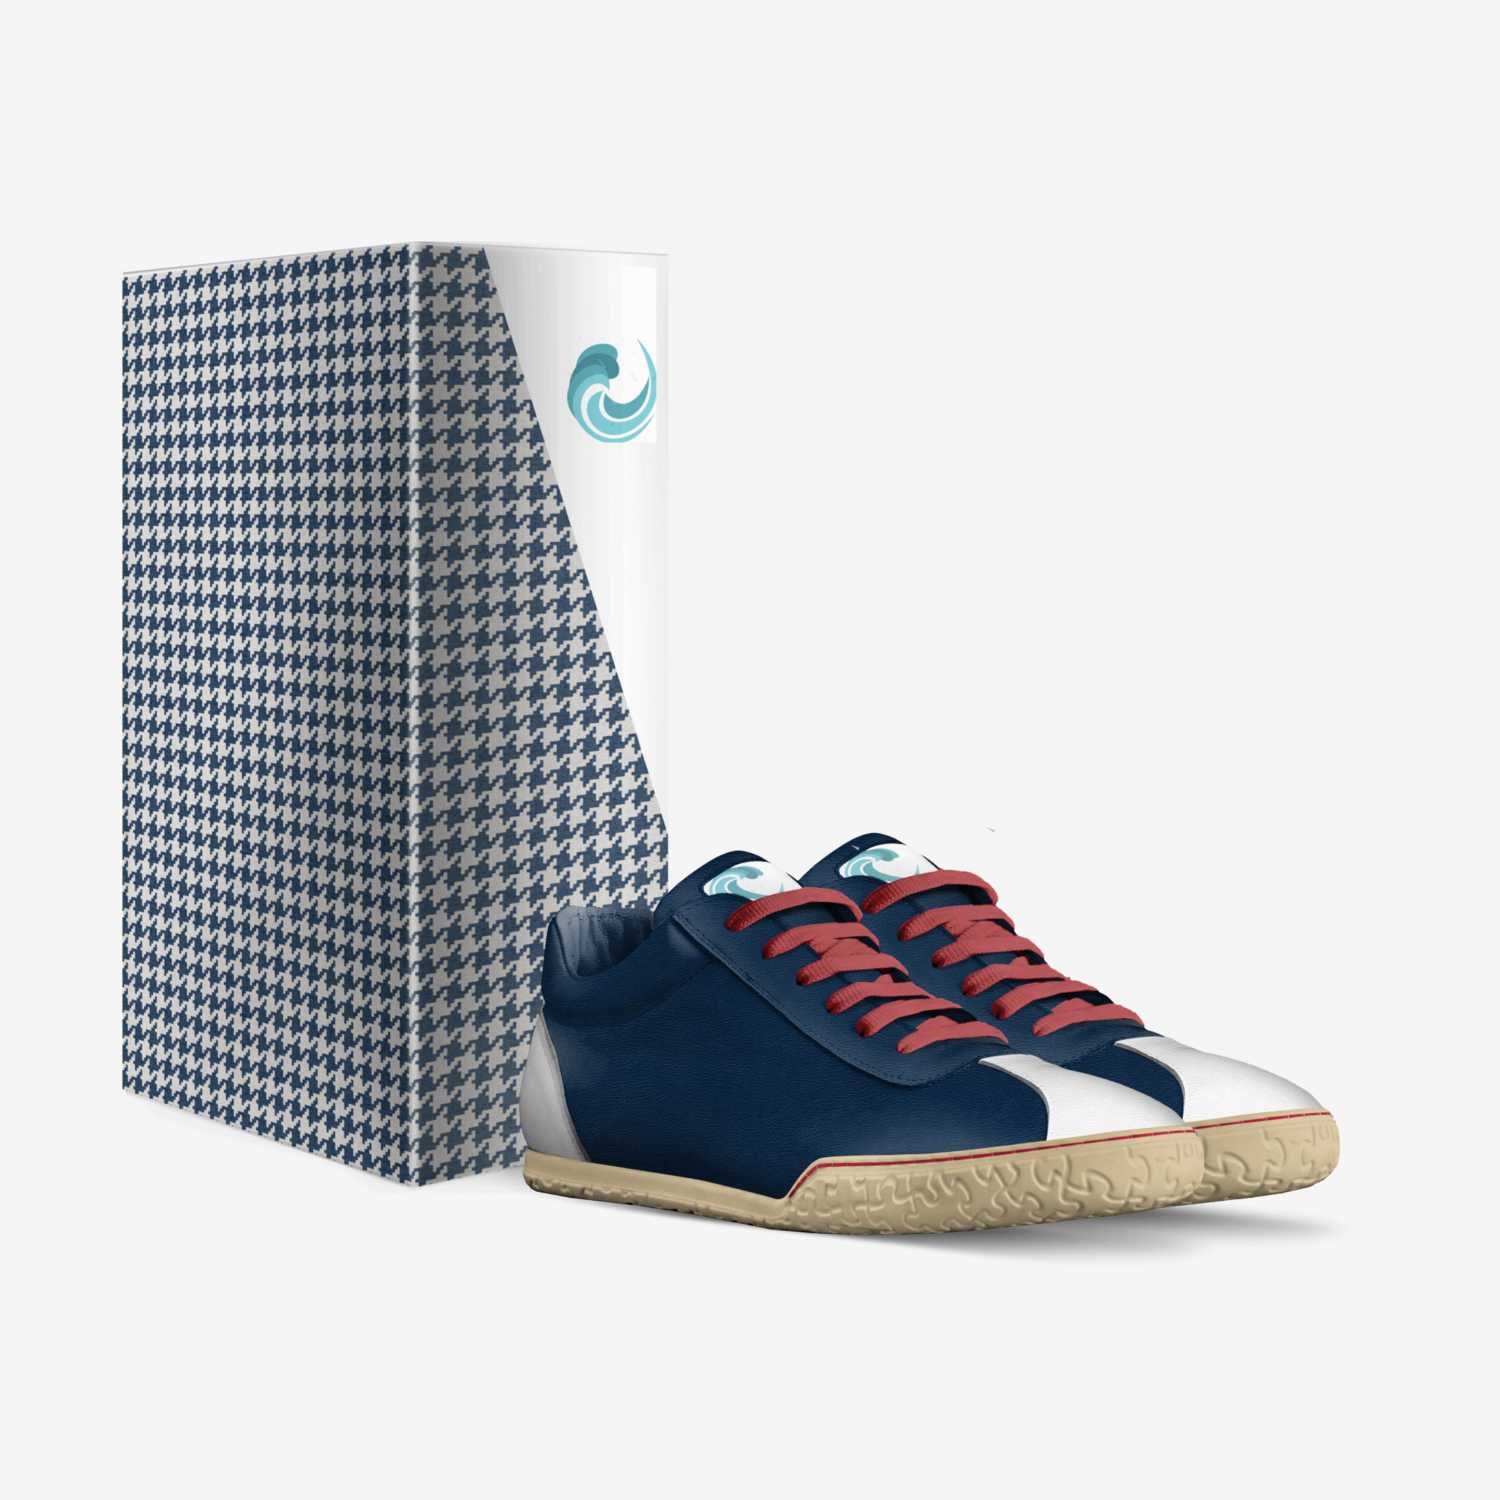 Catilina Coegi custom made in Italy shoes by Paulo Austero | Box view